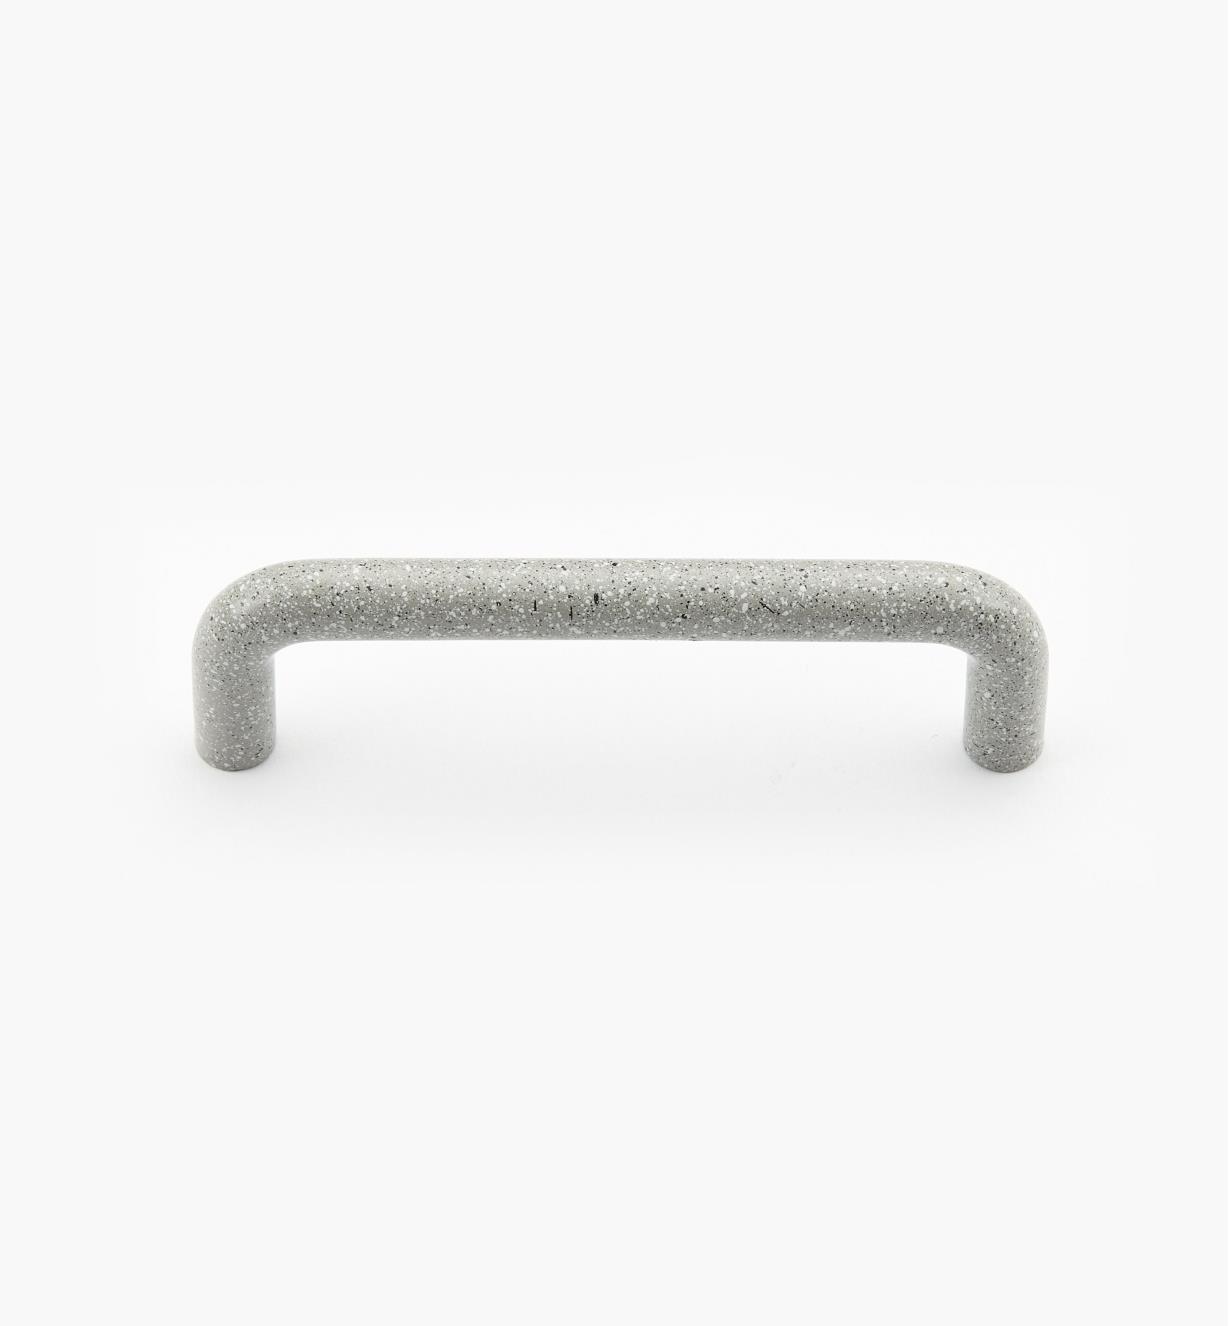 00W3852 - 96mm Sandstone Gray Handle